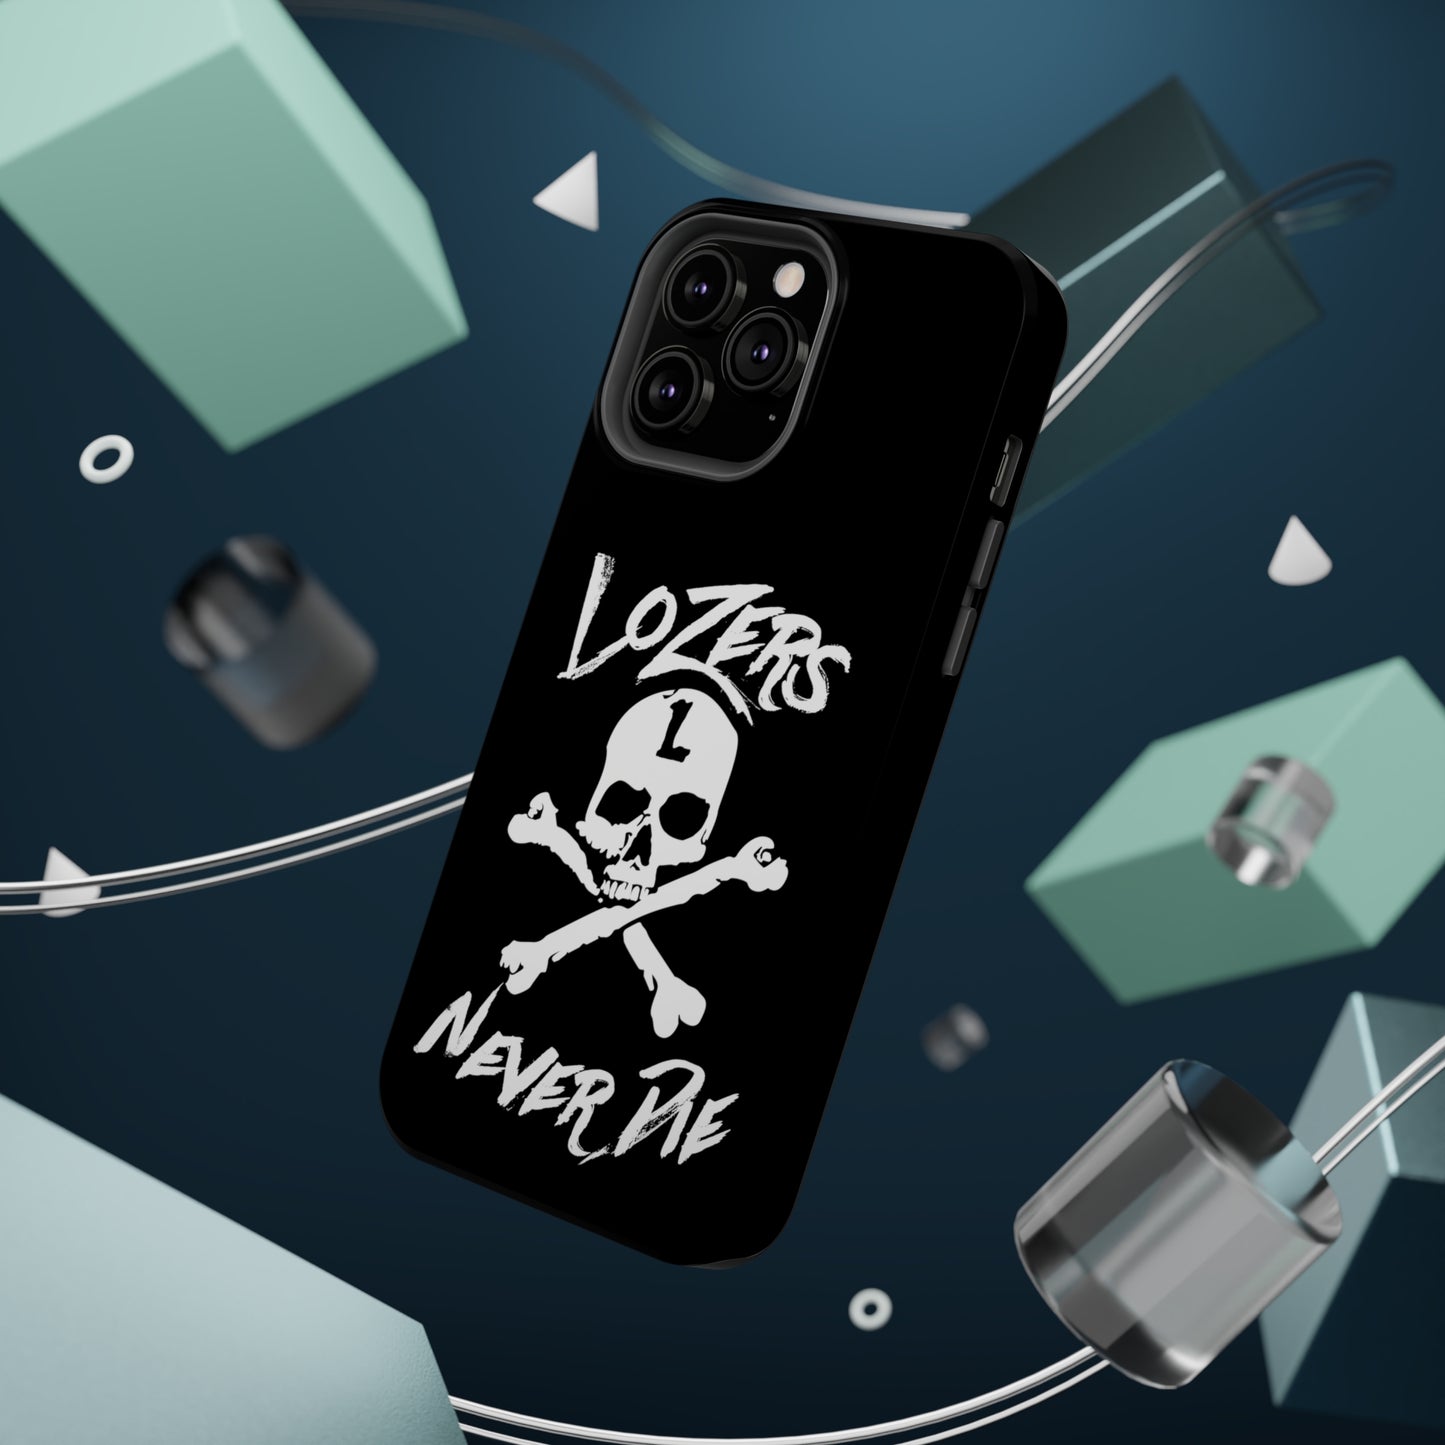 "Tough" LoZer iPhone MagSafe Case (Black)